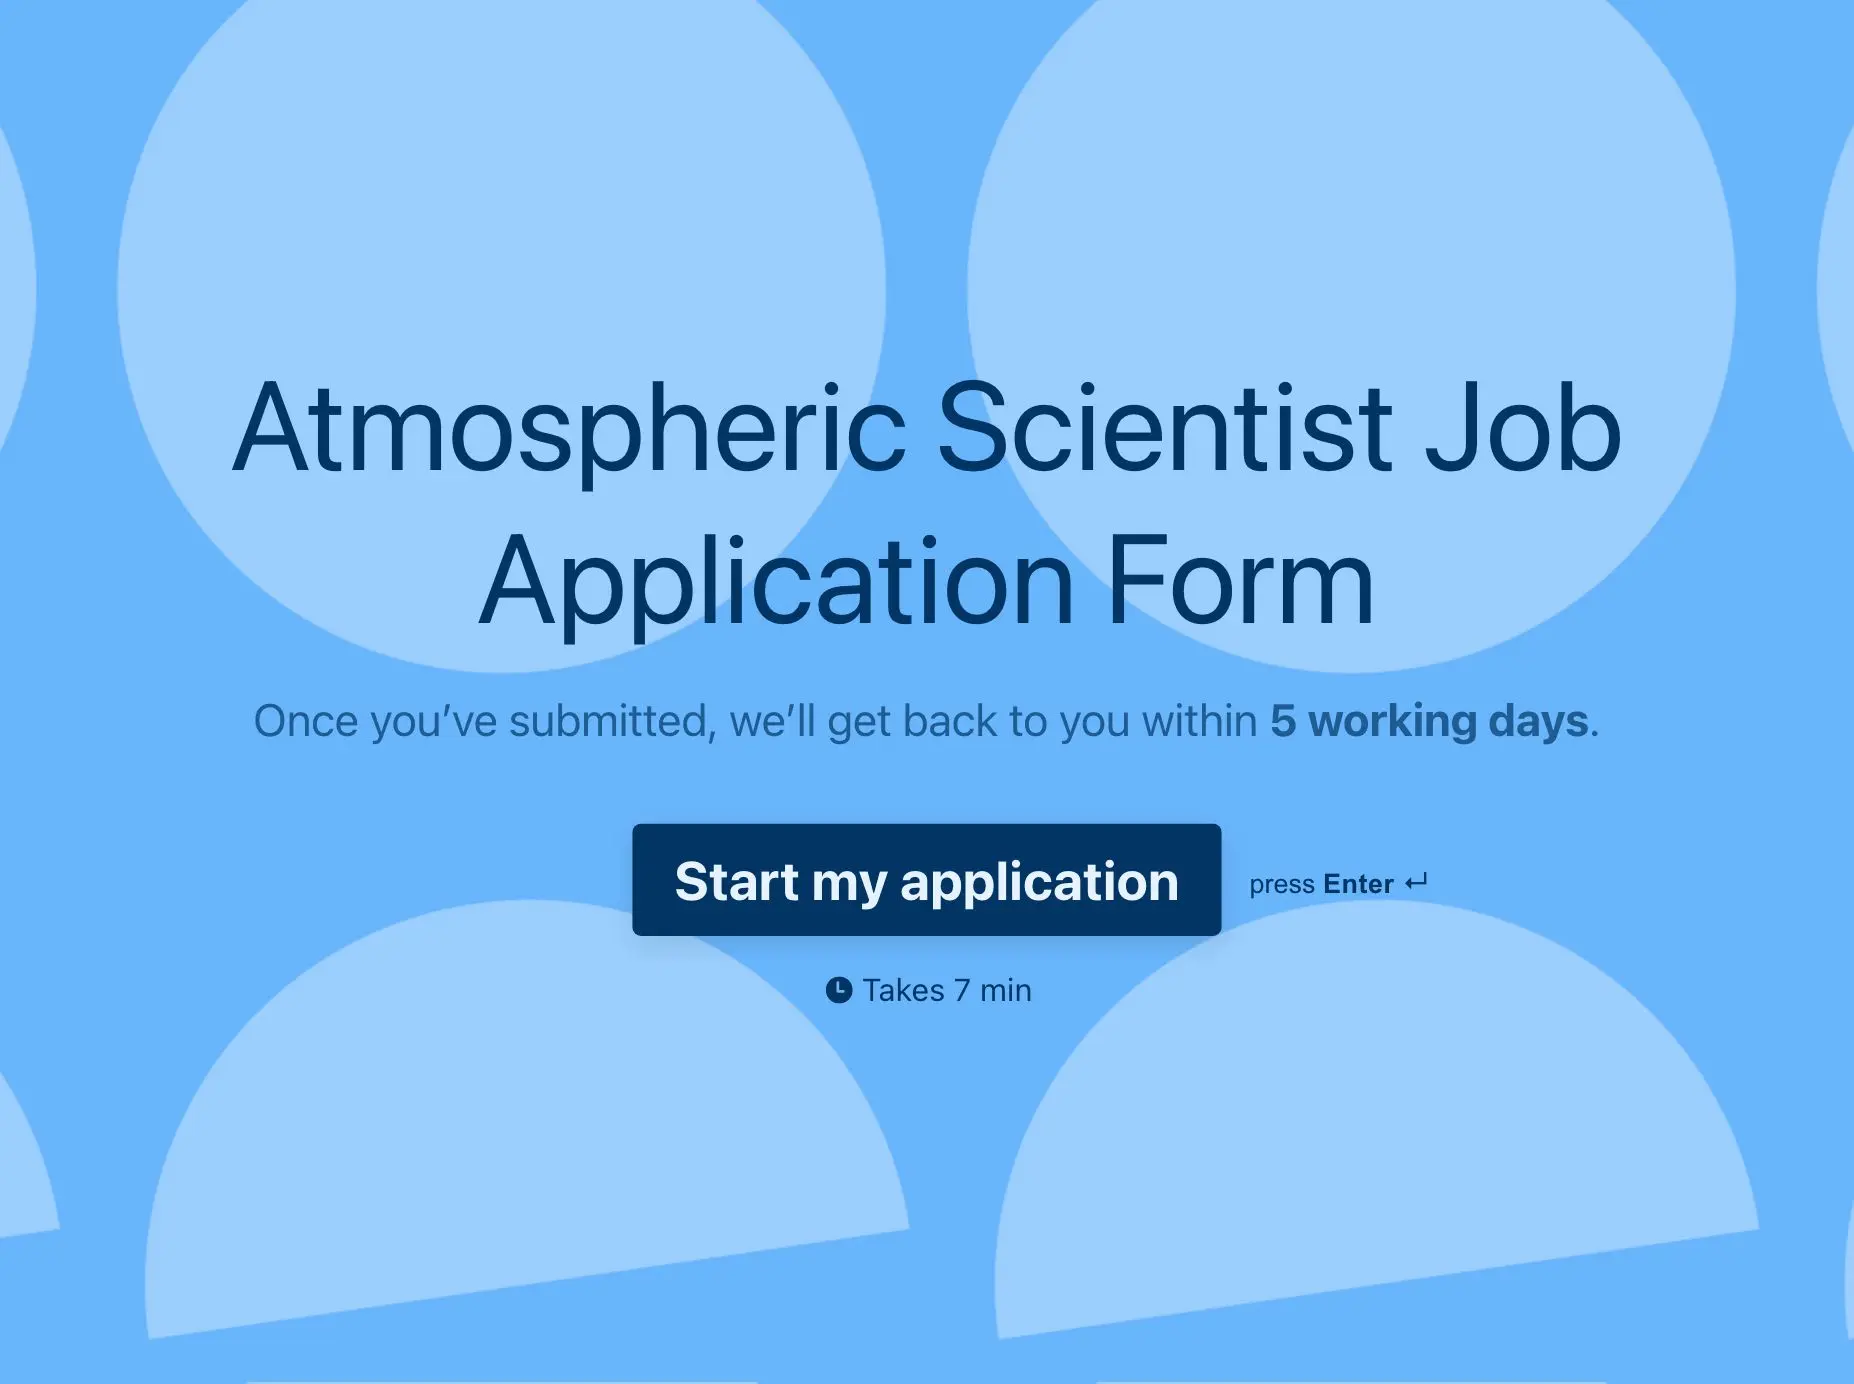 Atmospheric Scientist Job Application Form Template Hero